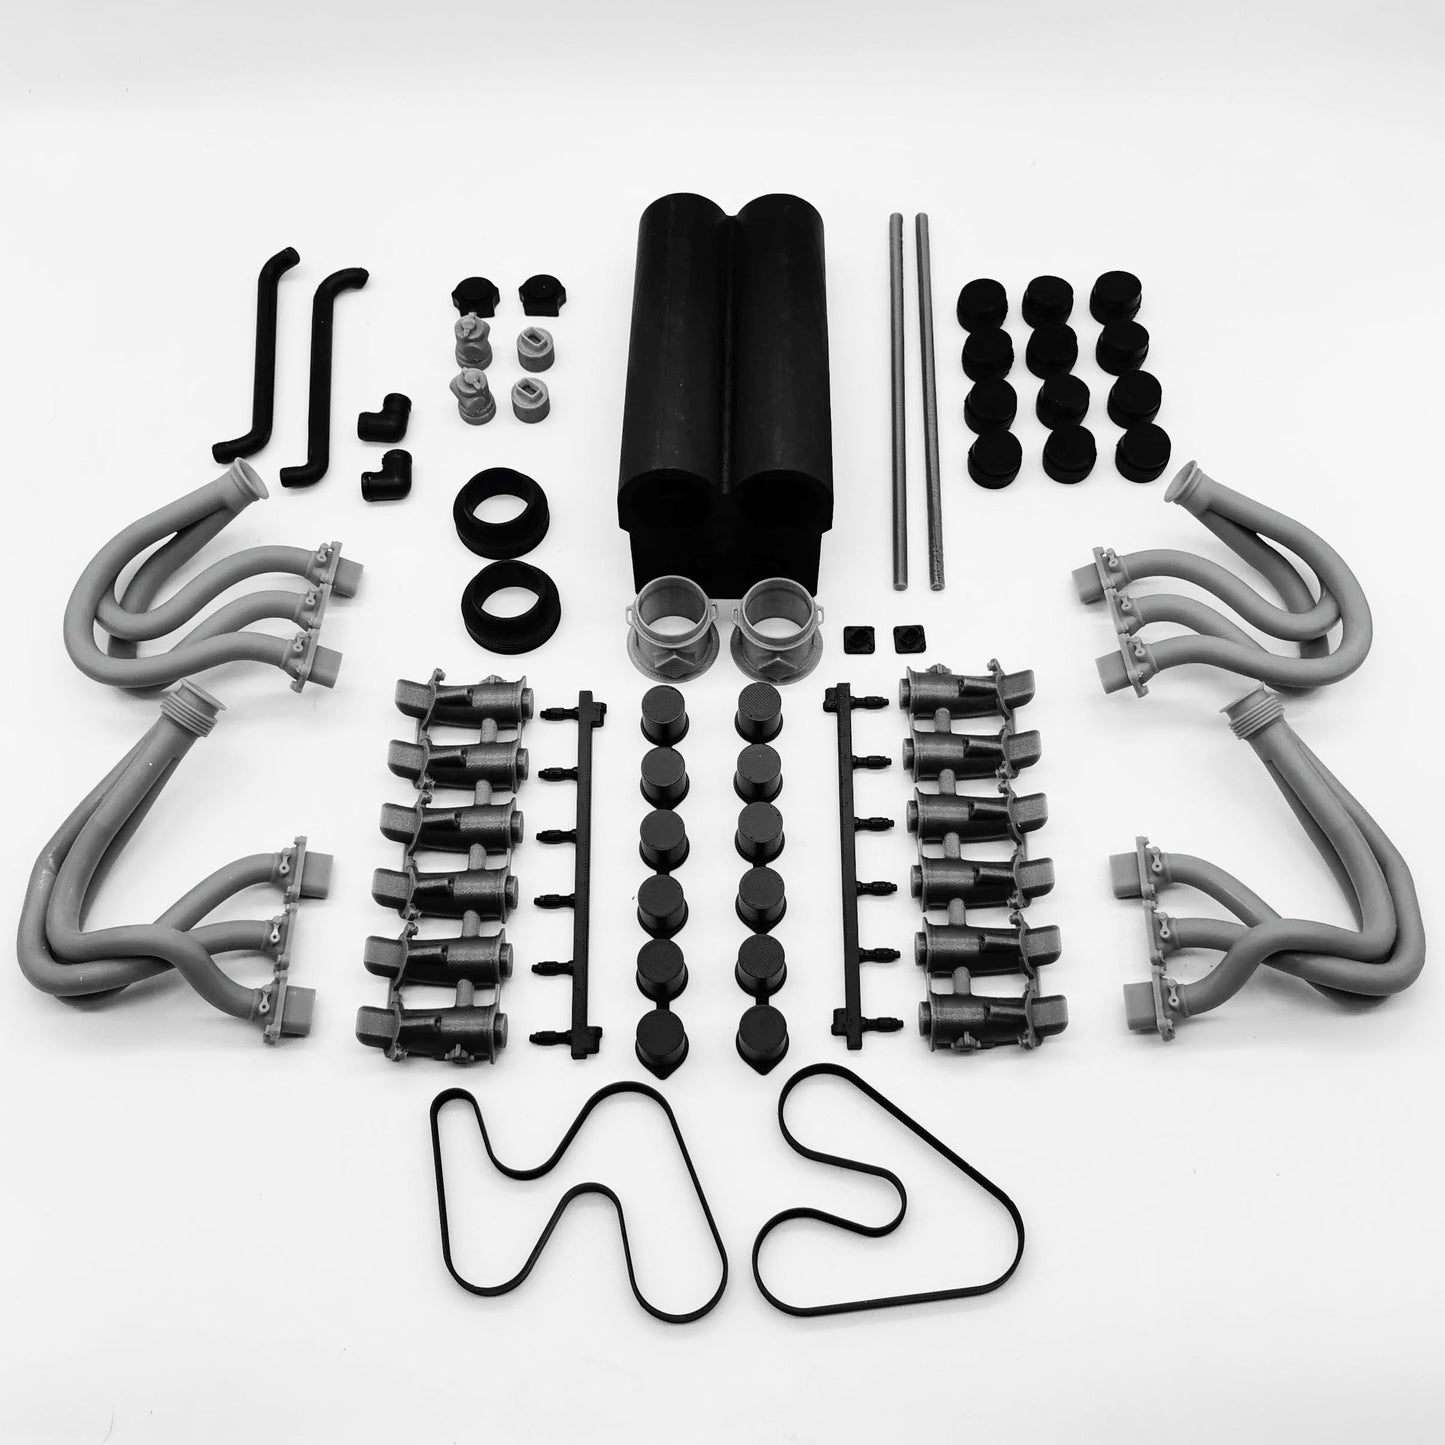 1/4 BMW Motorsport S70/2 - McLaren F1 Scale Engine - DIY Kit